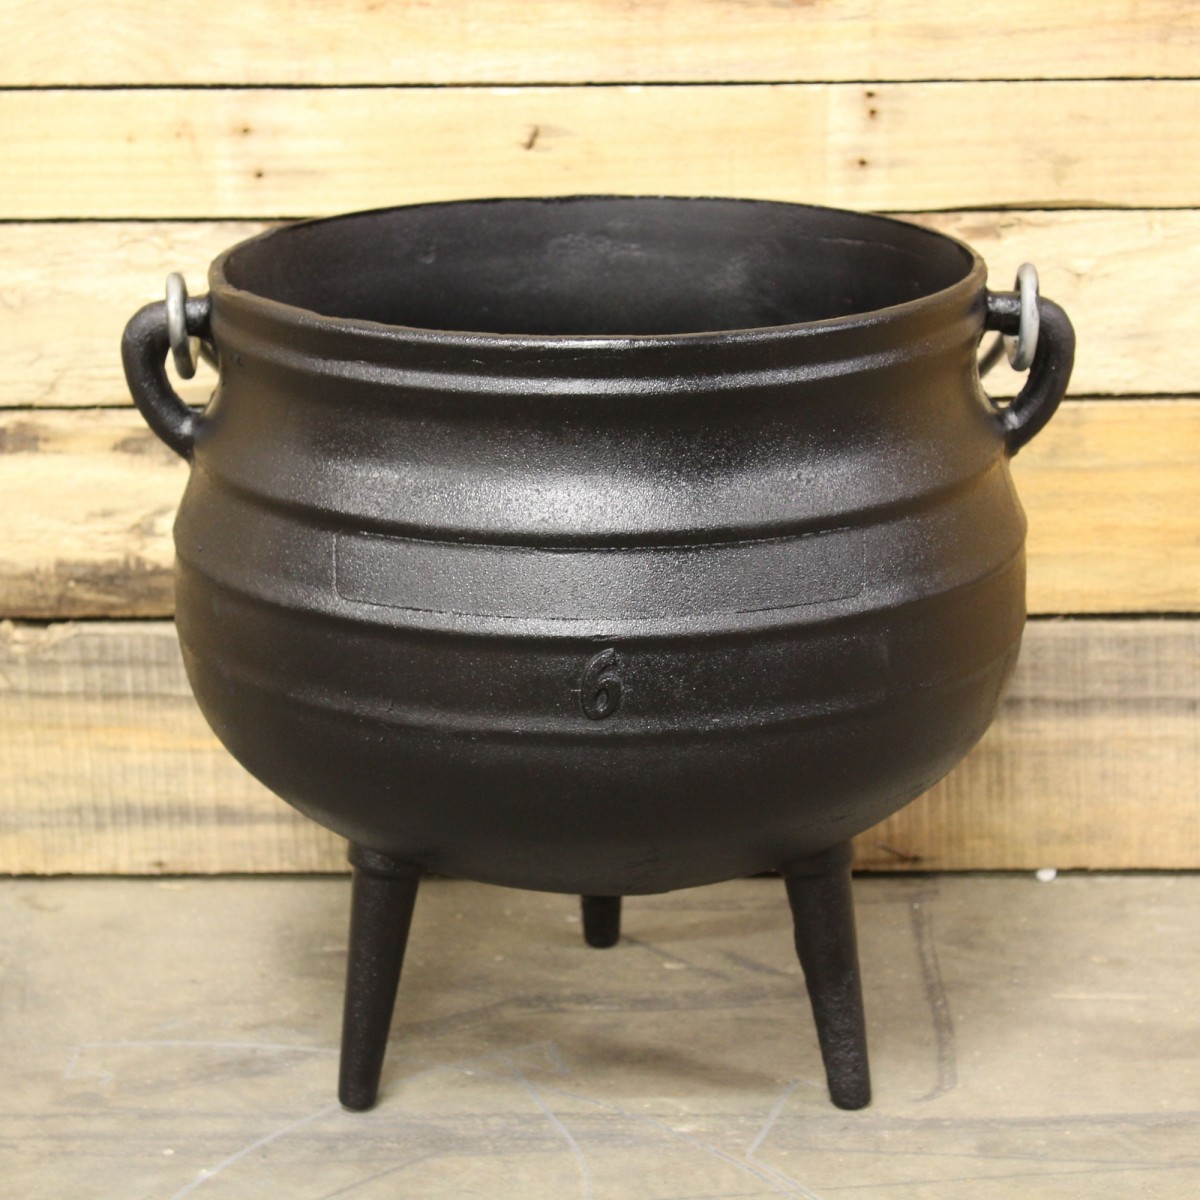 Cast Iron Potjie Cauldron - 4.75 Gallon Size 8 | Cast Iron Cookware